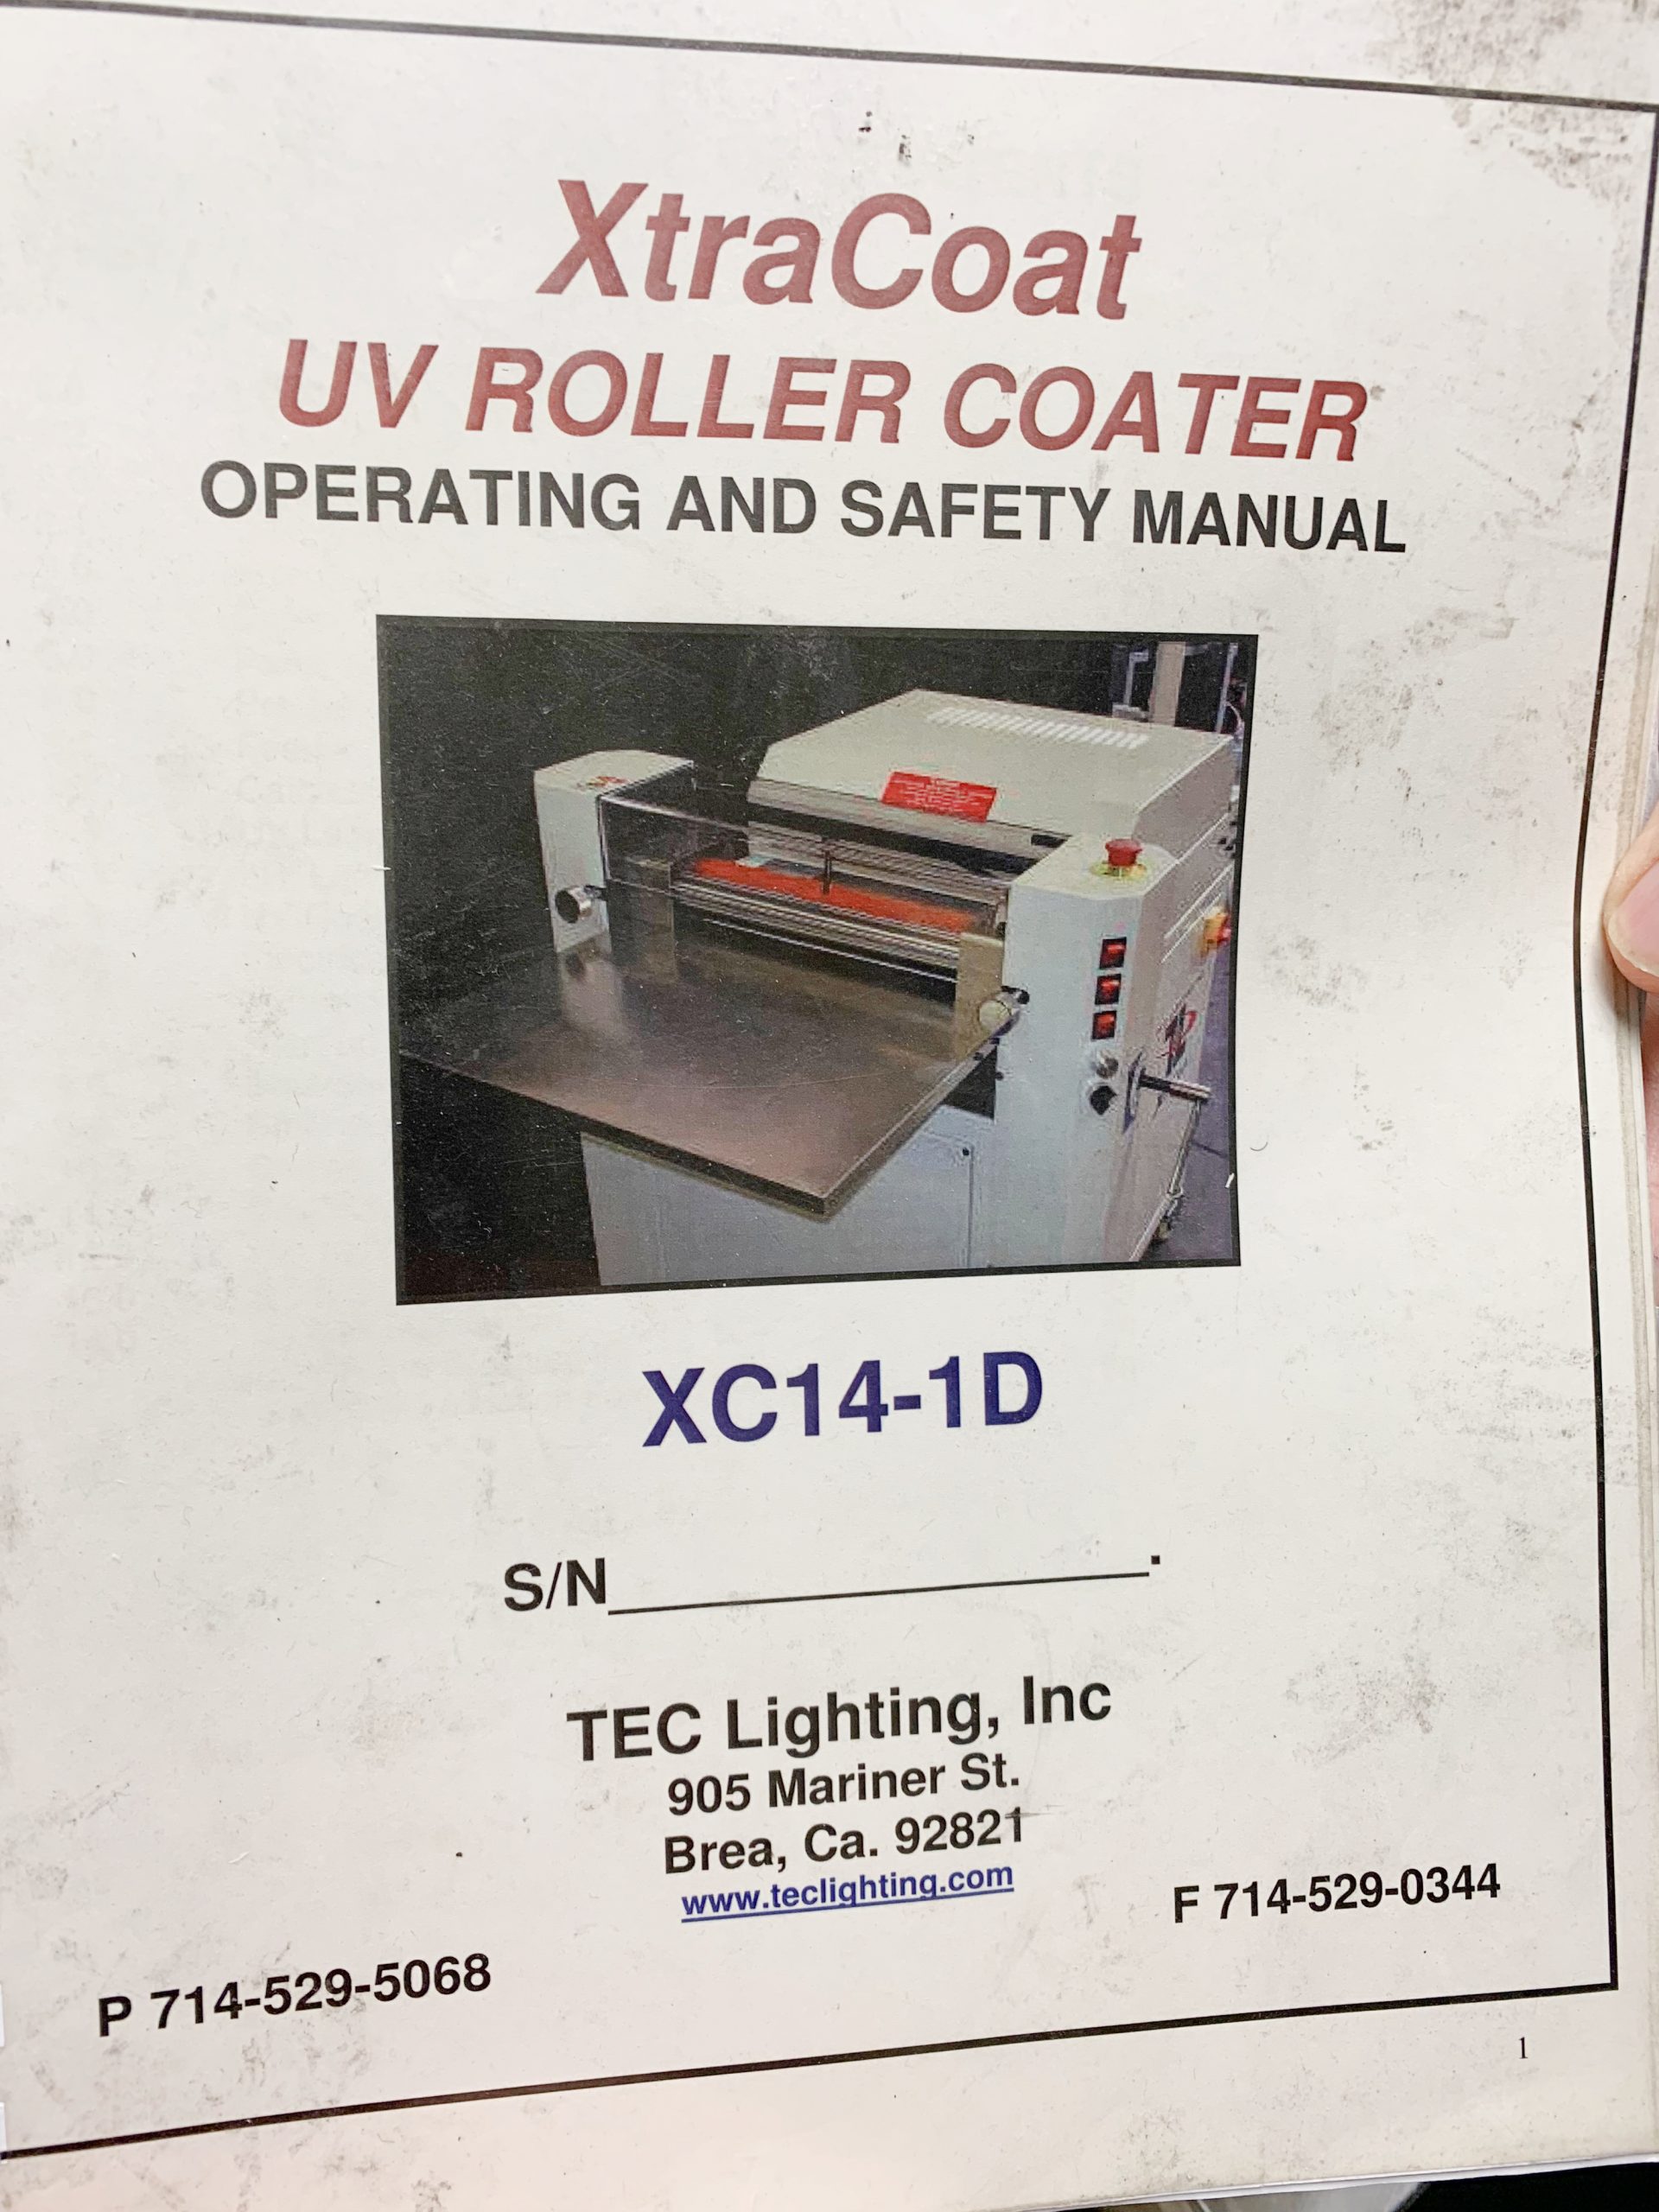 Tec Lighting XC14 UV Coater / XtraCoat Mini UV Roller Coater (used) Item # UE-073021C (Illinois)